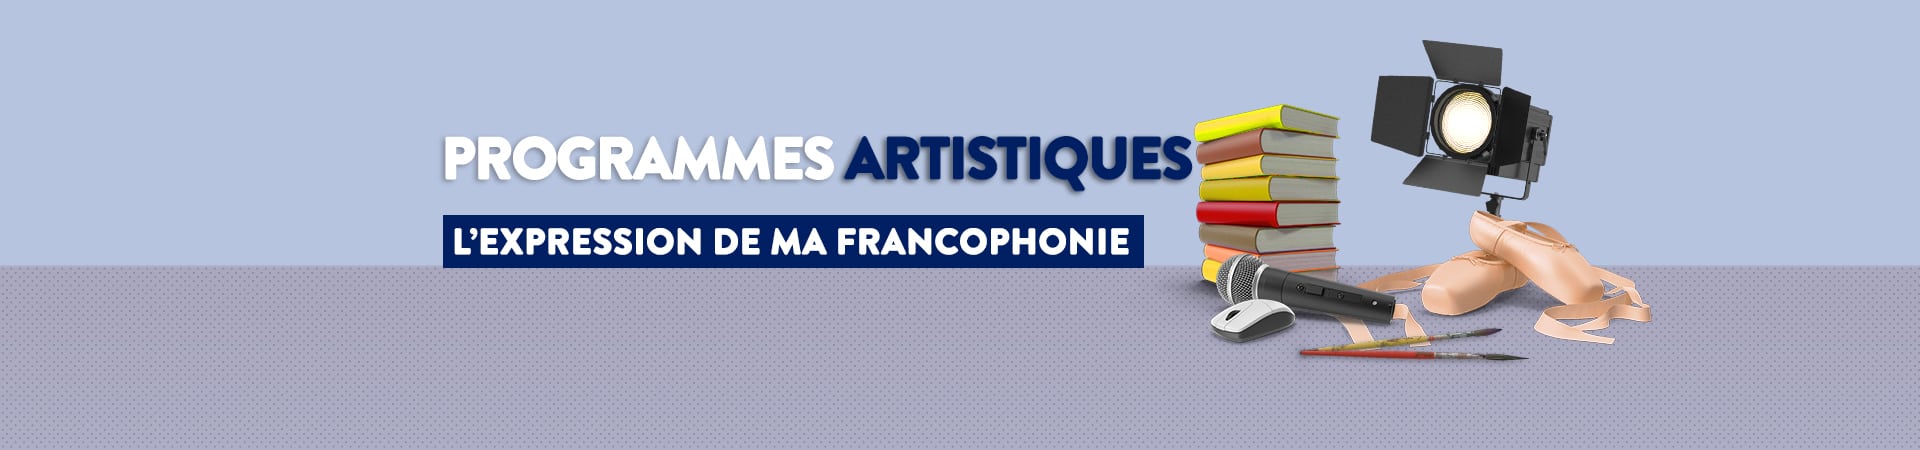 Programmes artistiques - L'expression de ma francophonie